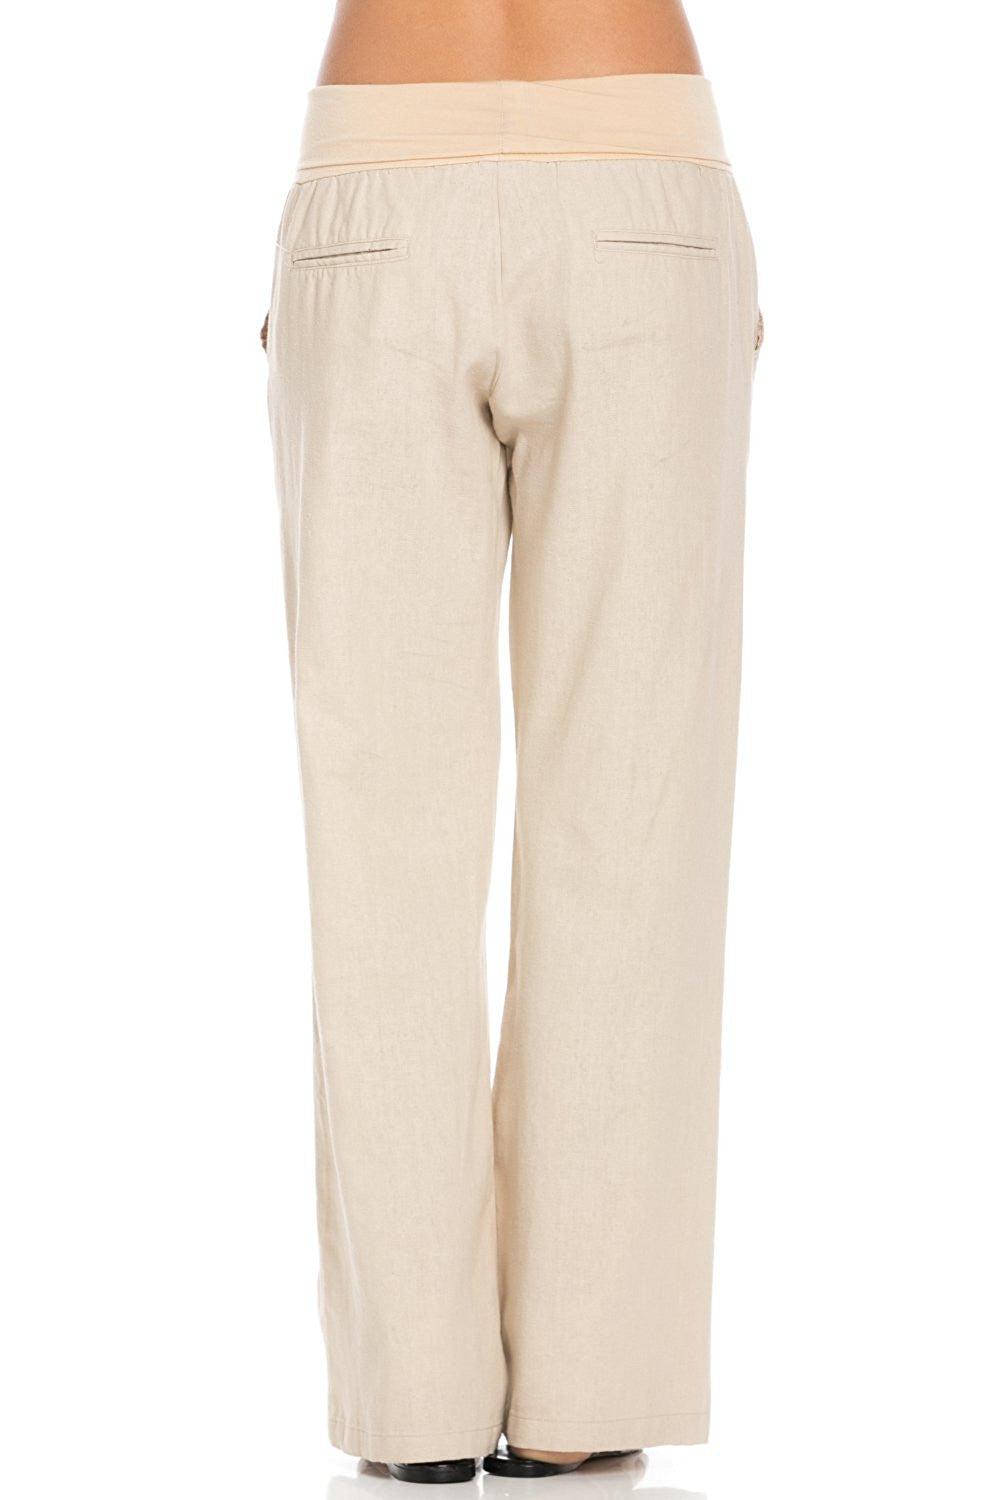 Comfy Fold Over Linen Pants (Natural) - Poplooks